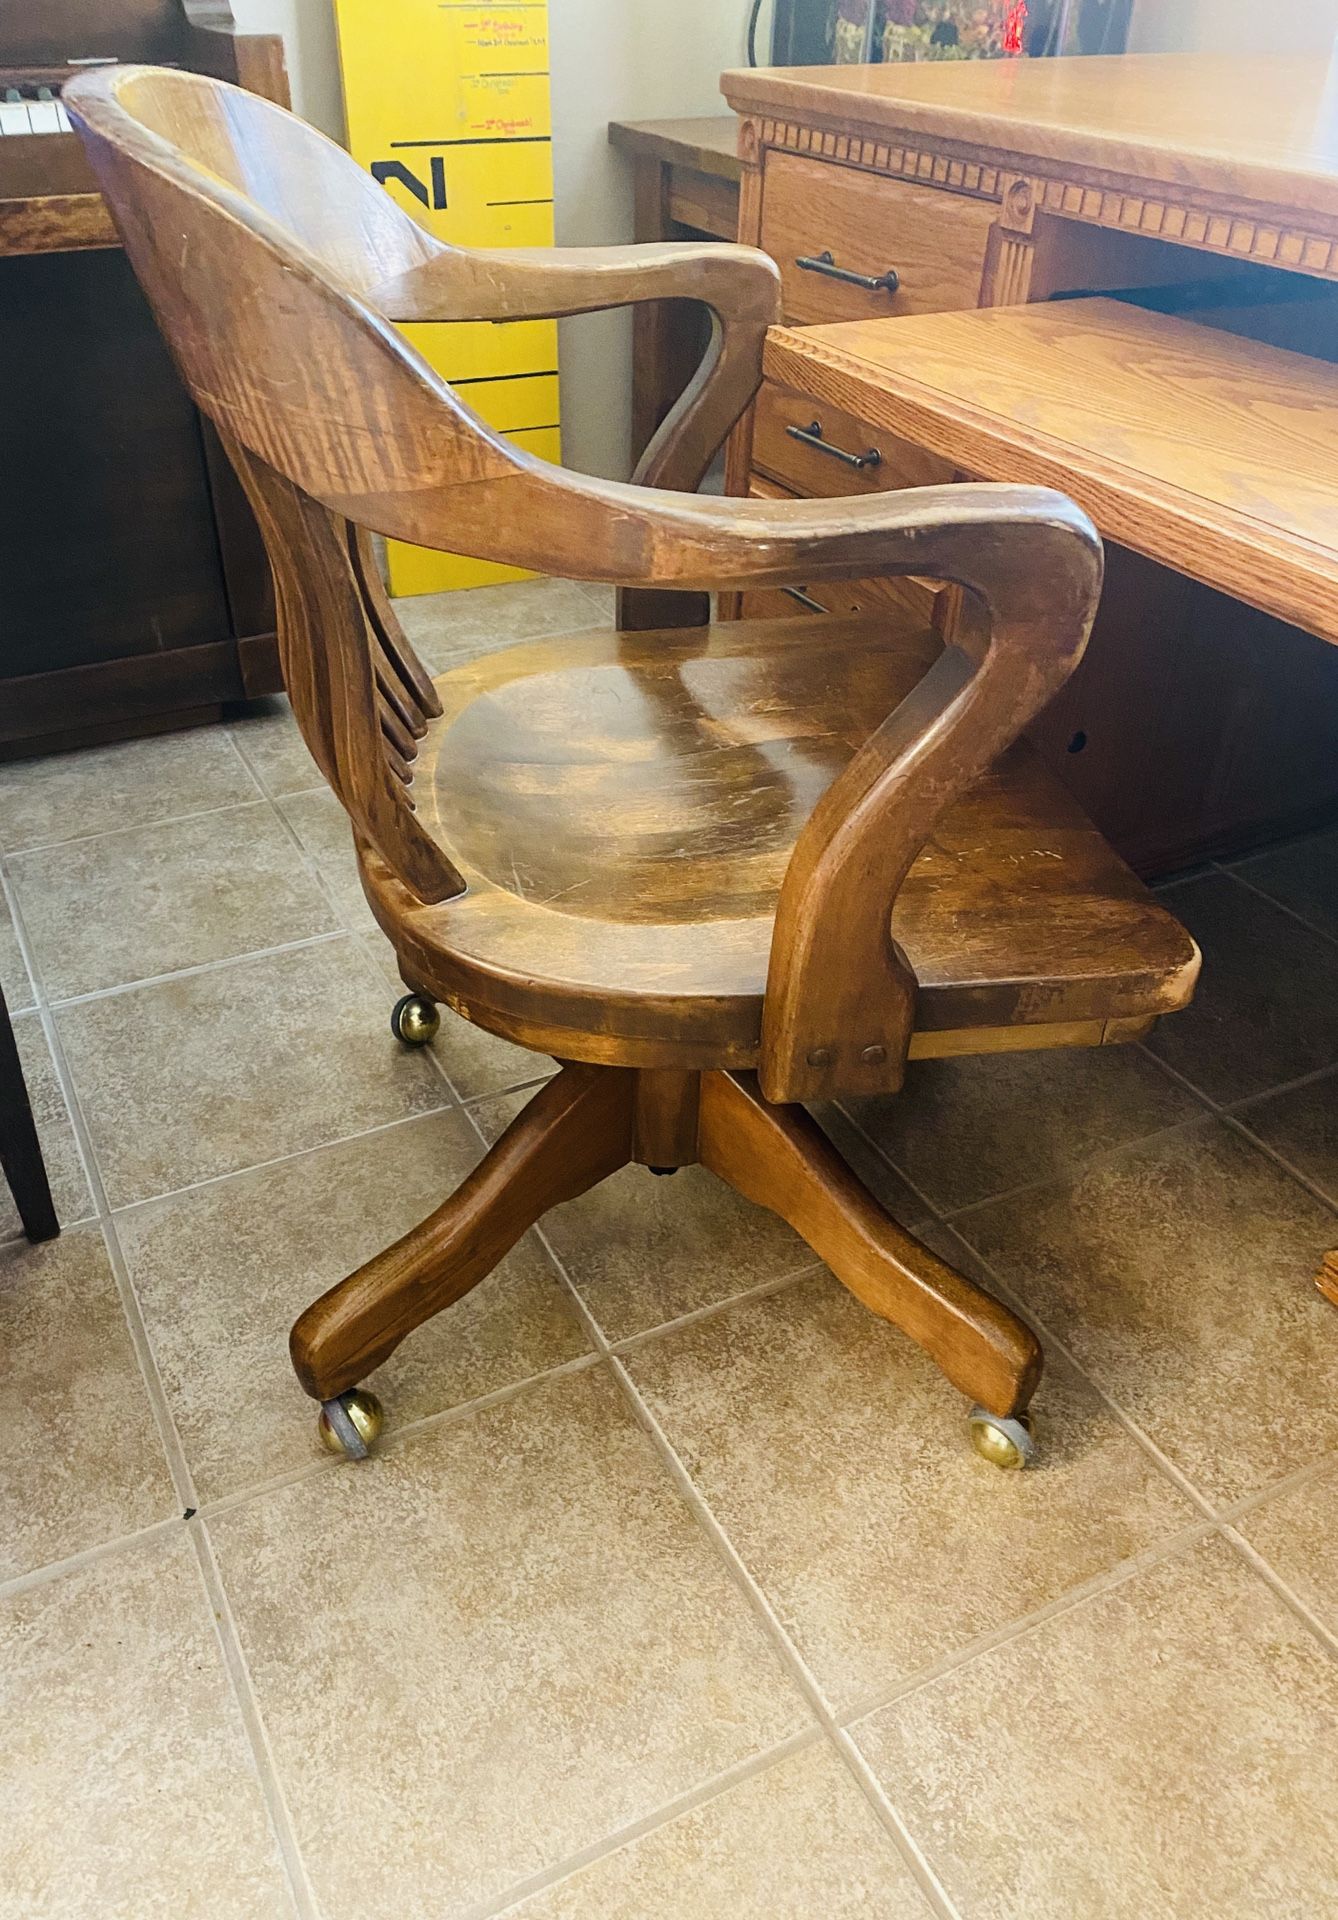 Vintage wood rolling chair